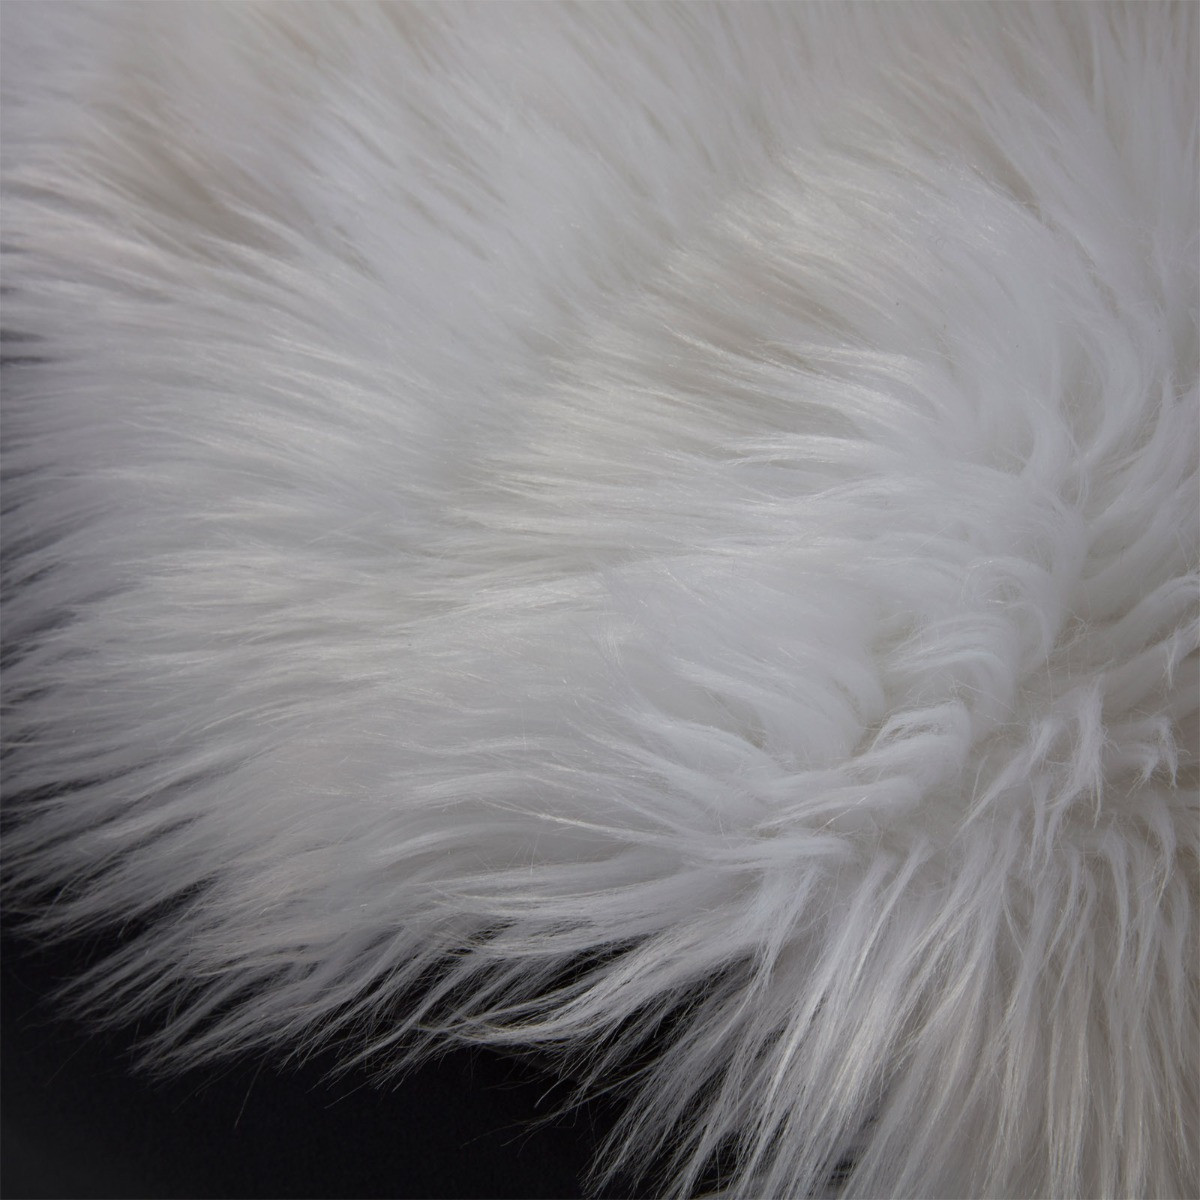 Sienna Faux Fur Sheepskin Rug, White - 60 x 90cm>